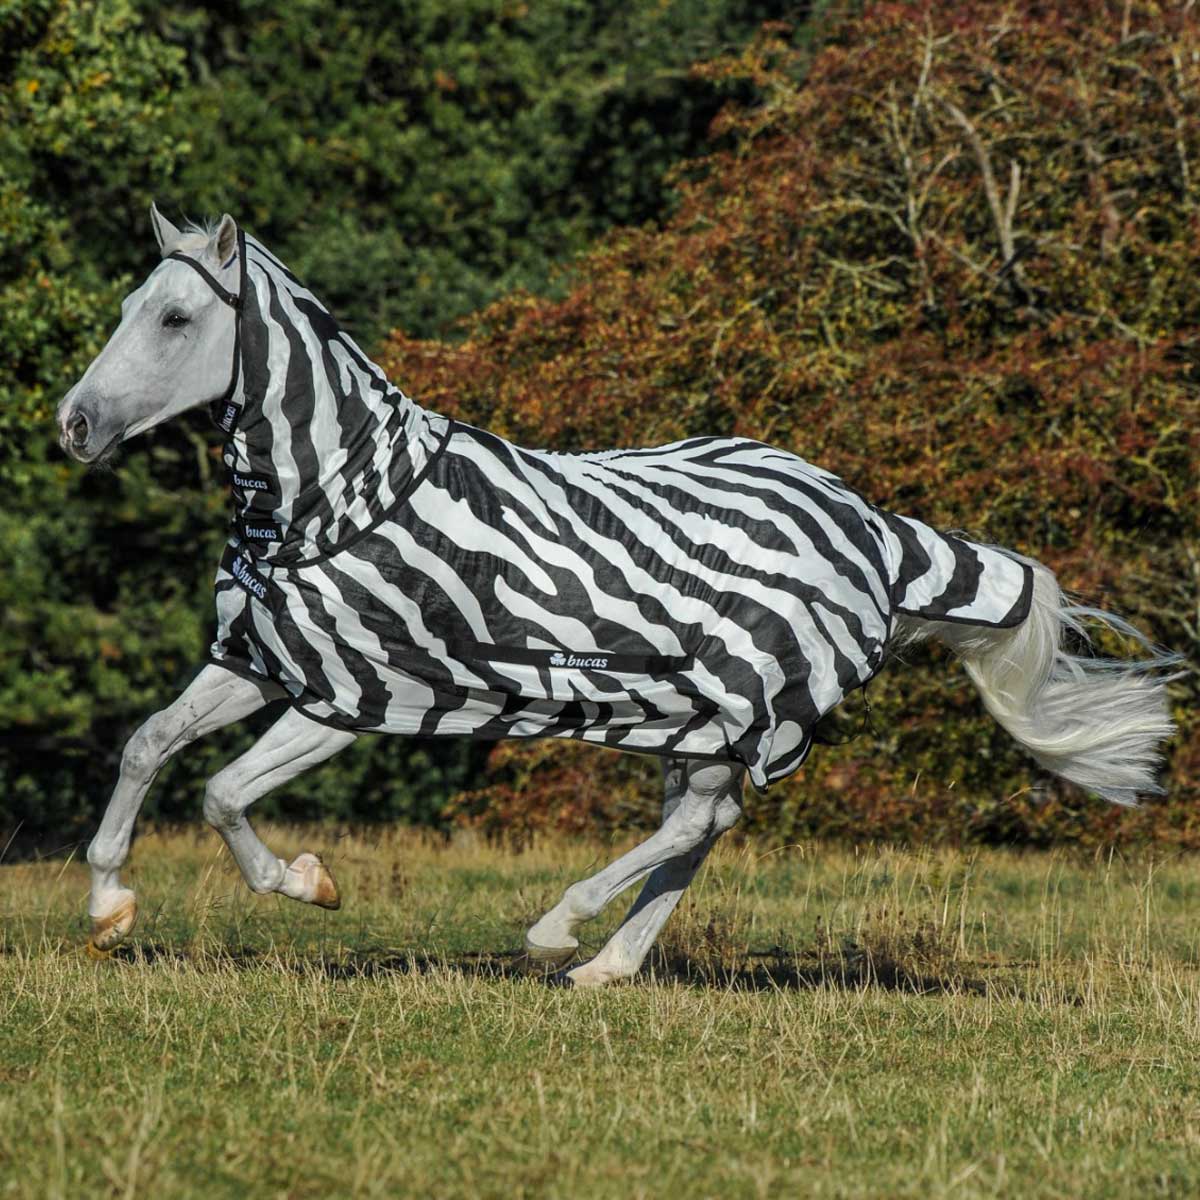 Bucas coperta cavallo antimosche Buzz-Off Zebra Full Neck